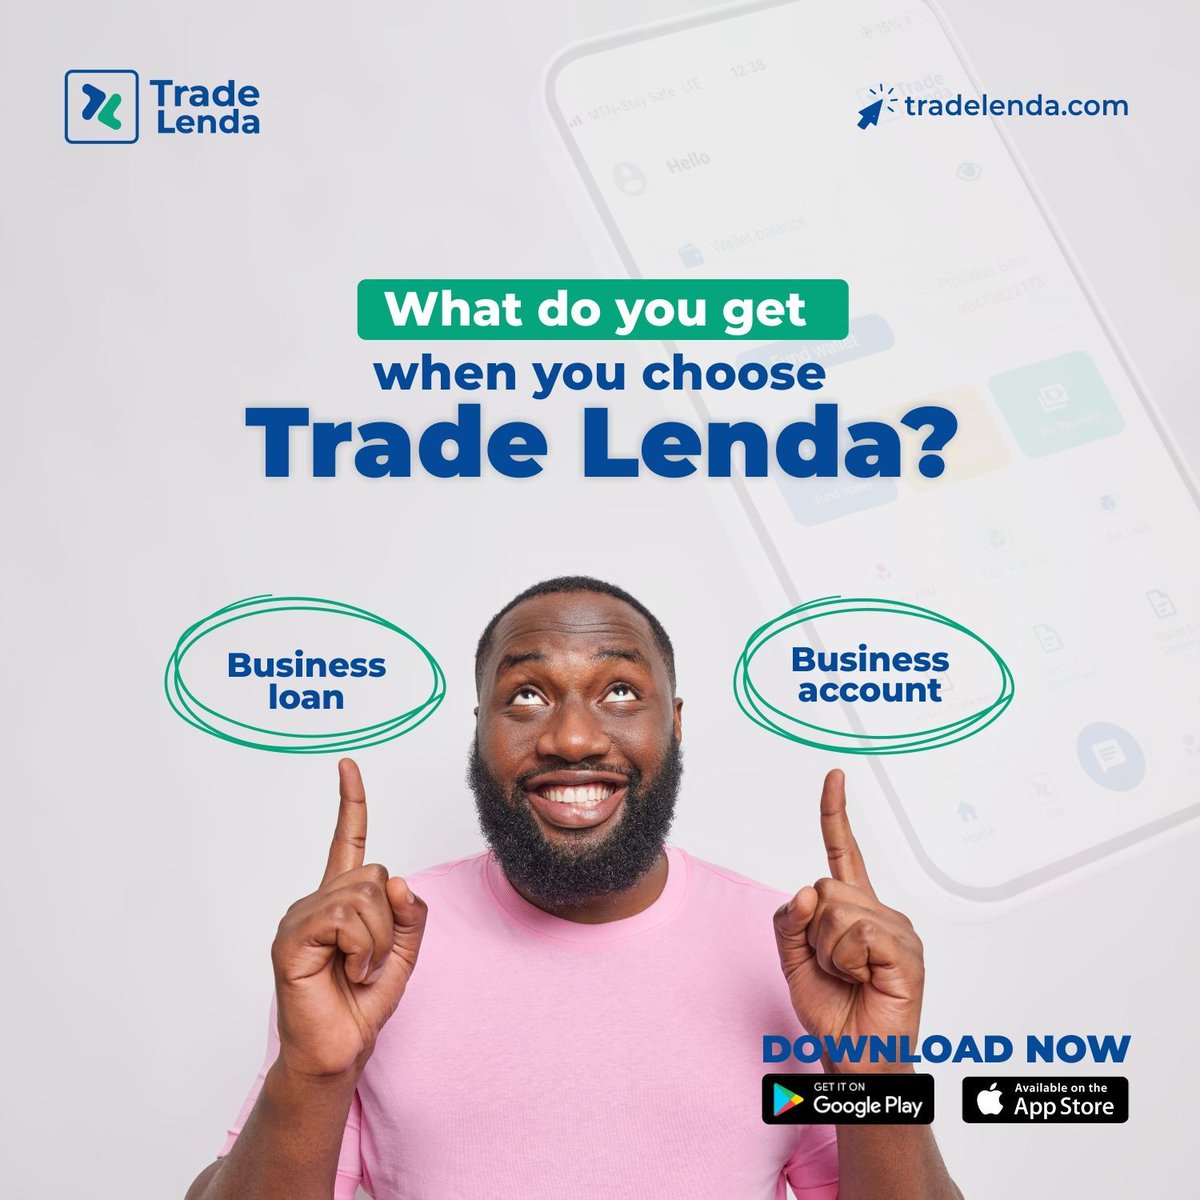 Plug into Trade Lenda and get access to grow your business.

Business Accounts

Business Loan

#TradeLenda #BusinessAccount #BusinessLoan #SMELoans